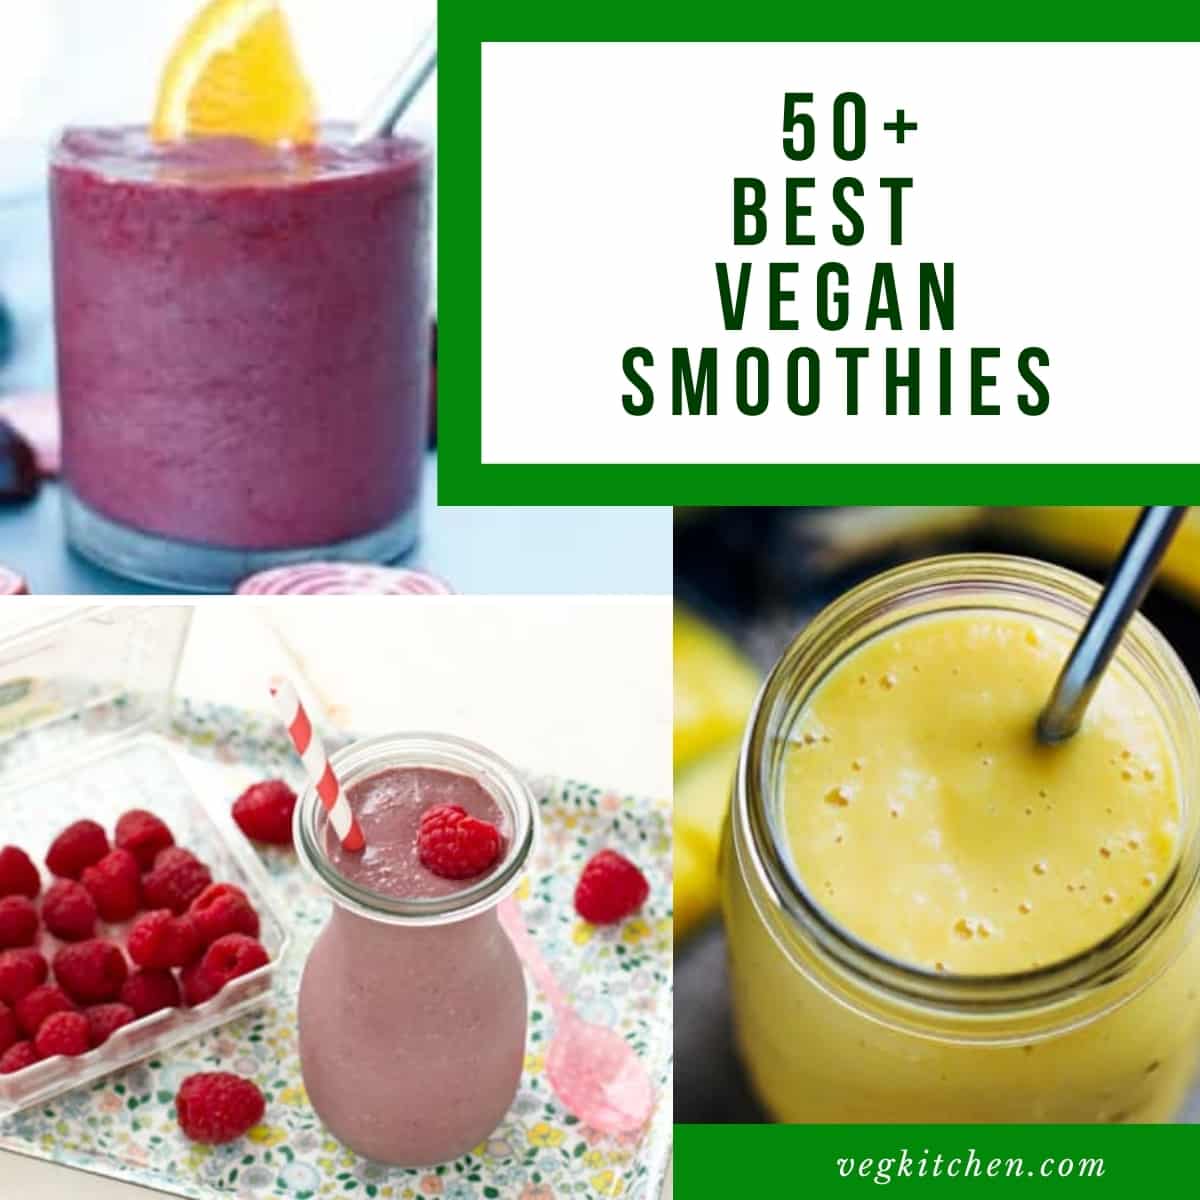 Best Vegan Smoothies - Over 50 Recipes! - Veg Kitchen